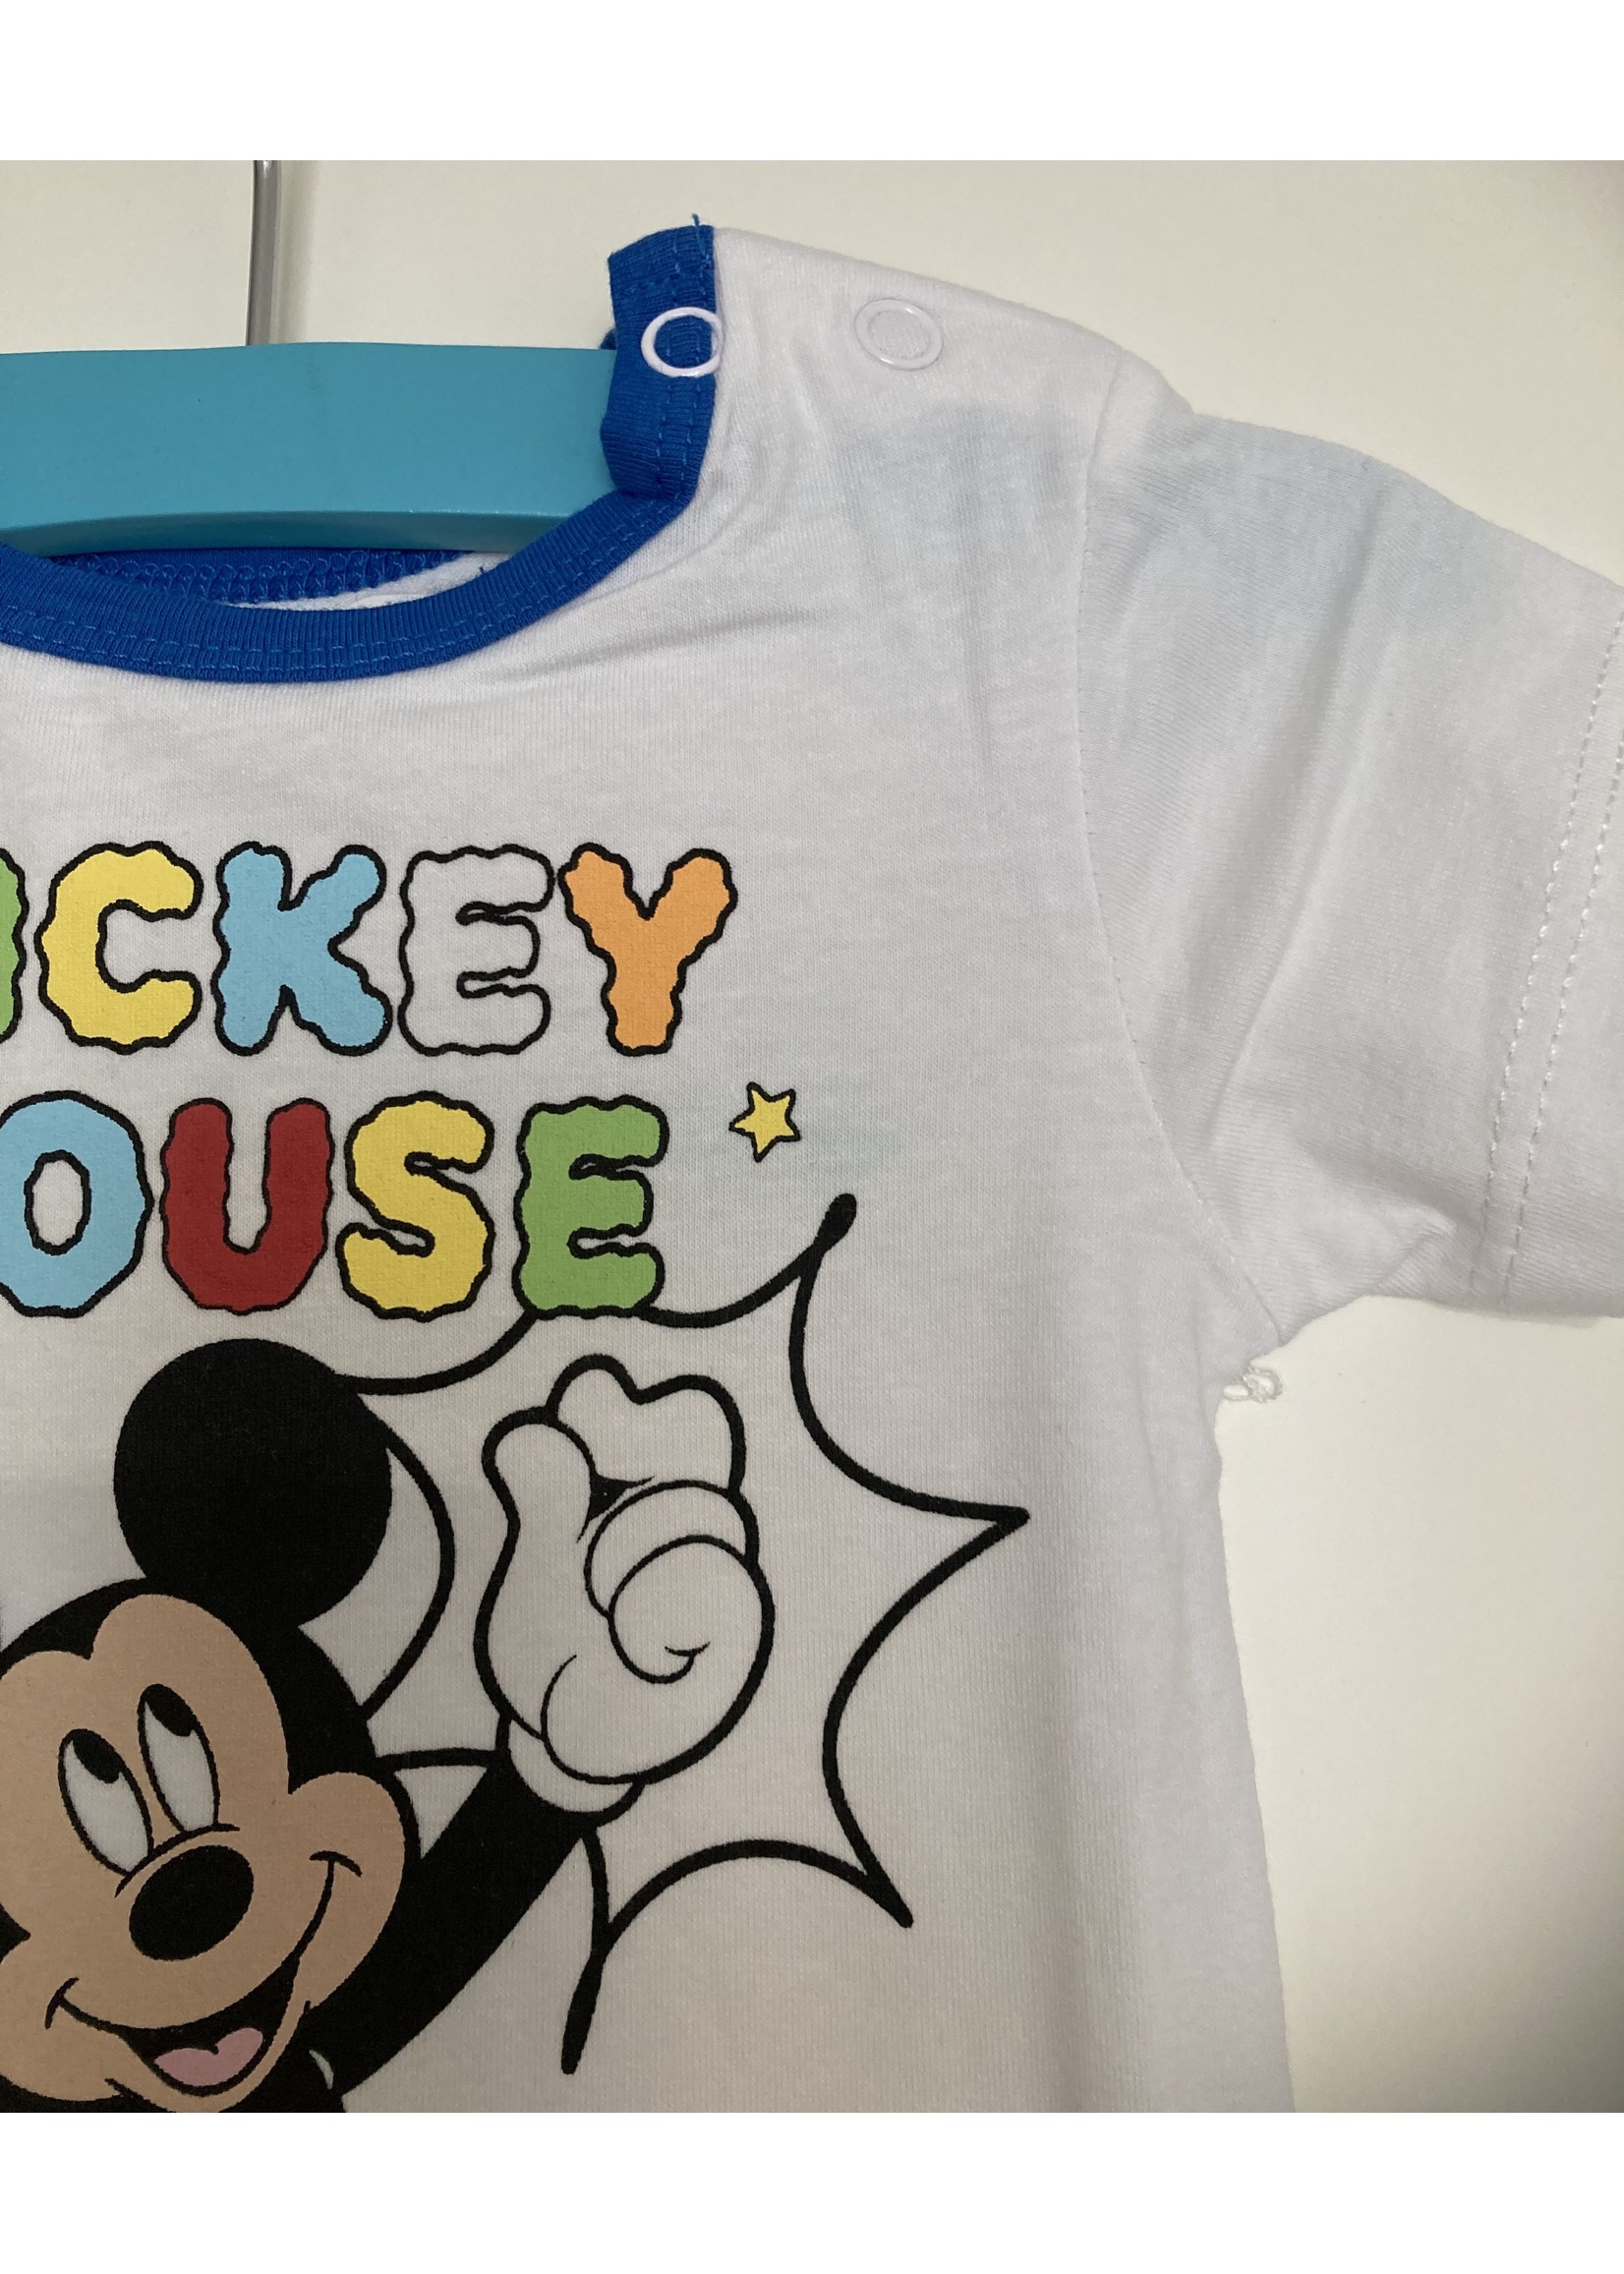 Disney baby Mickey Mouse rompertje van Disney baby wit